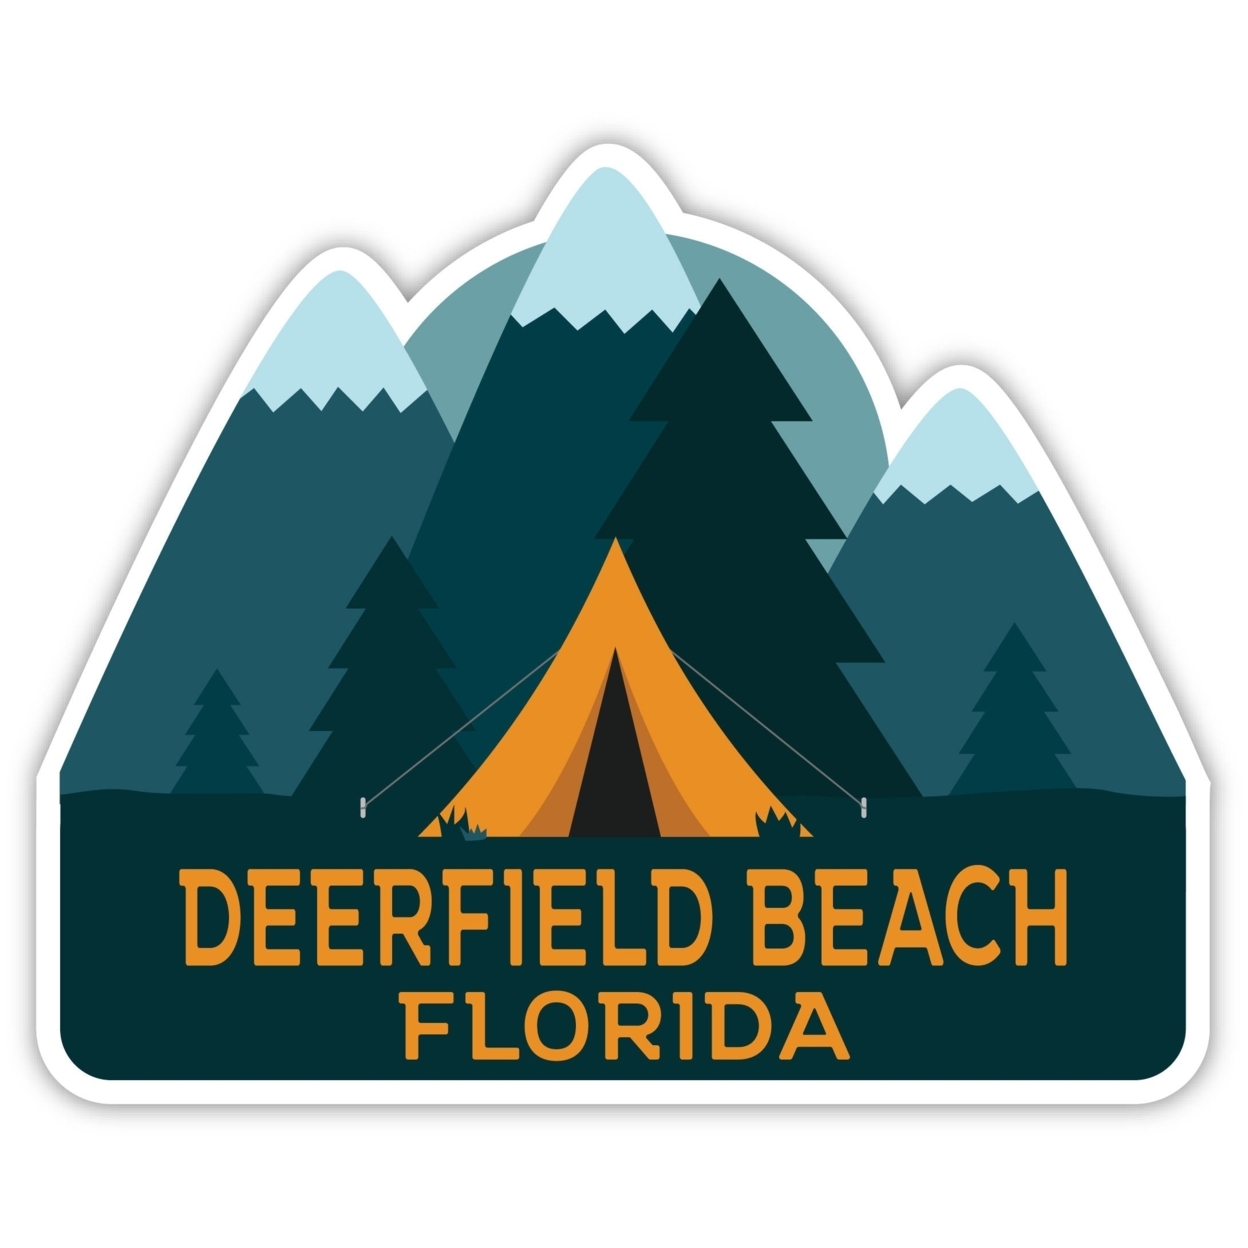 Deerfield Beach Florida Souvenir Decorative Stickers (Choose Theme And Size) - Single Unit, 6-Inch, Tent